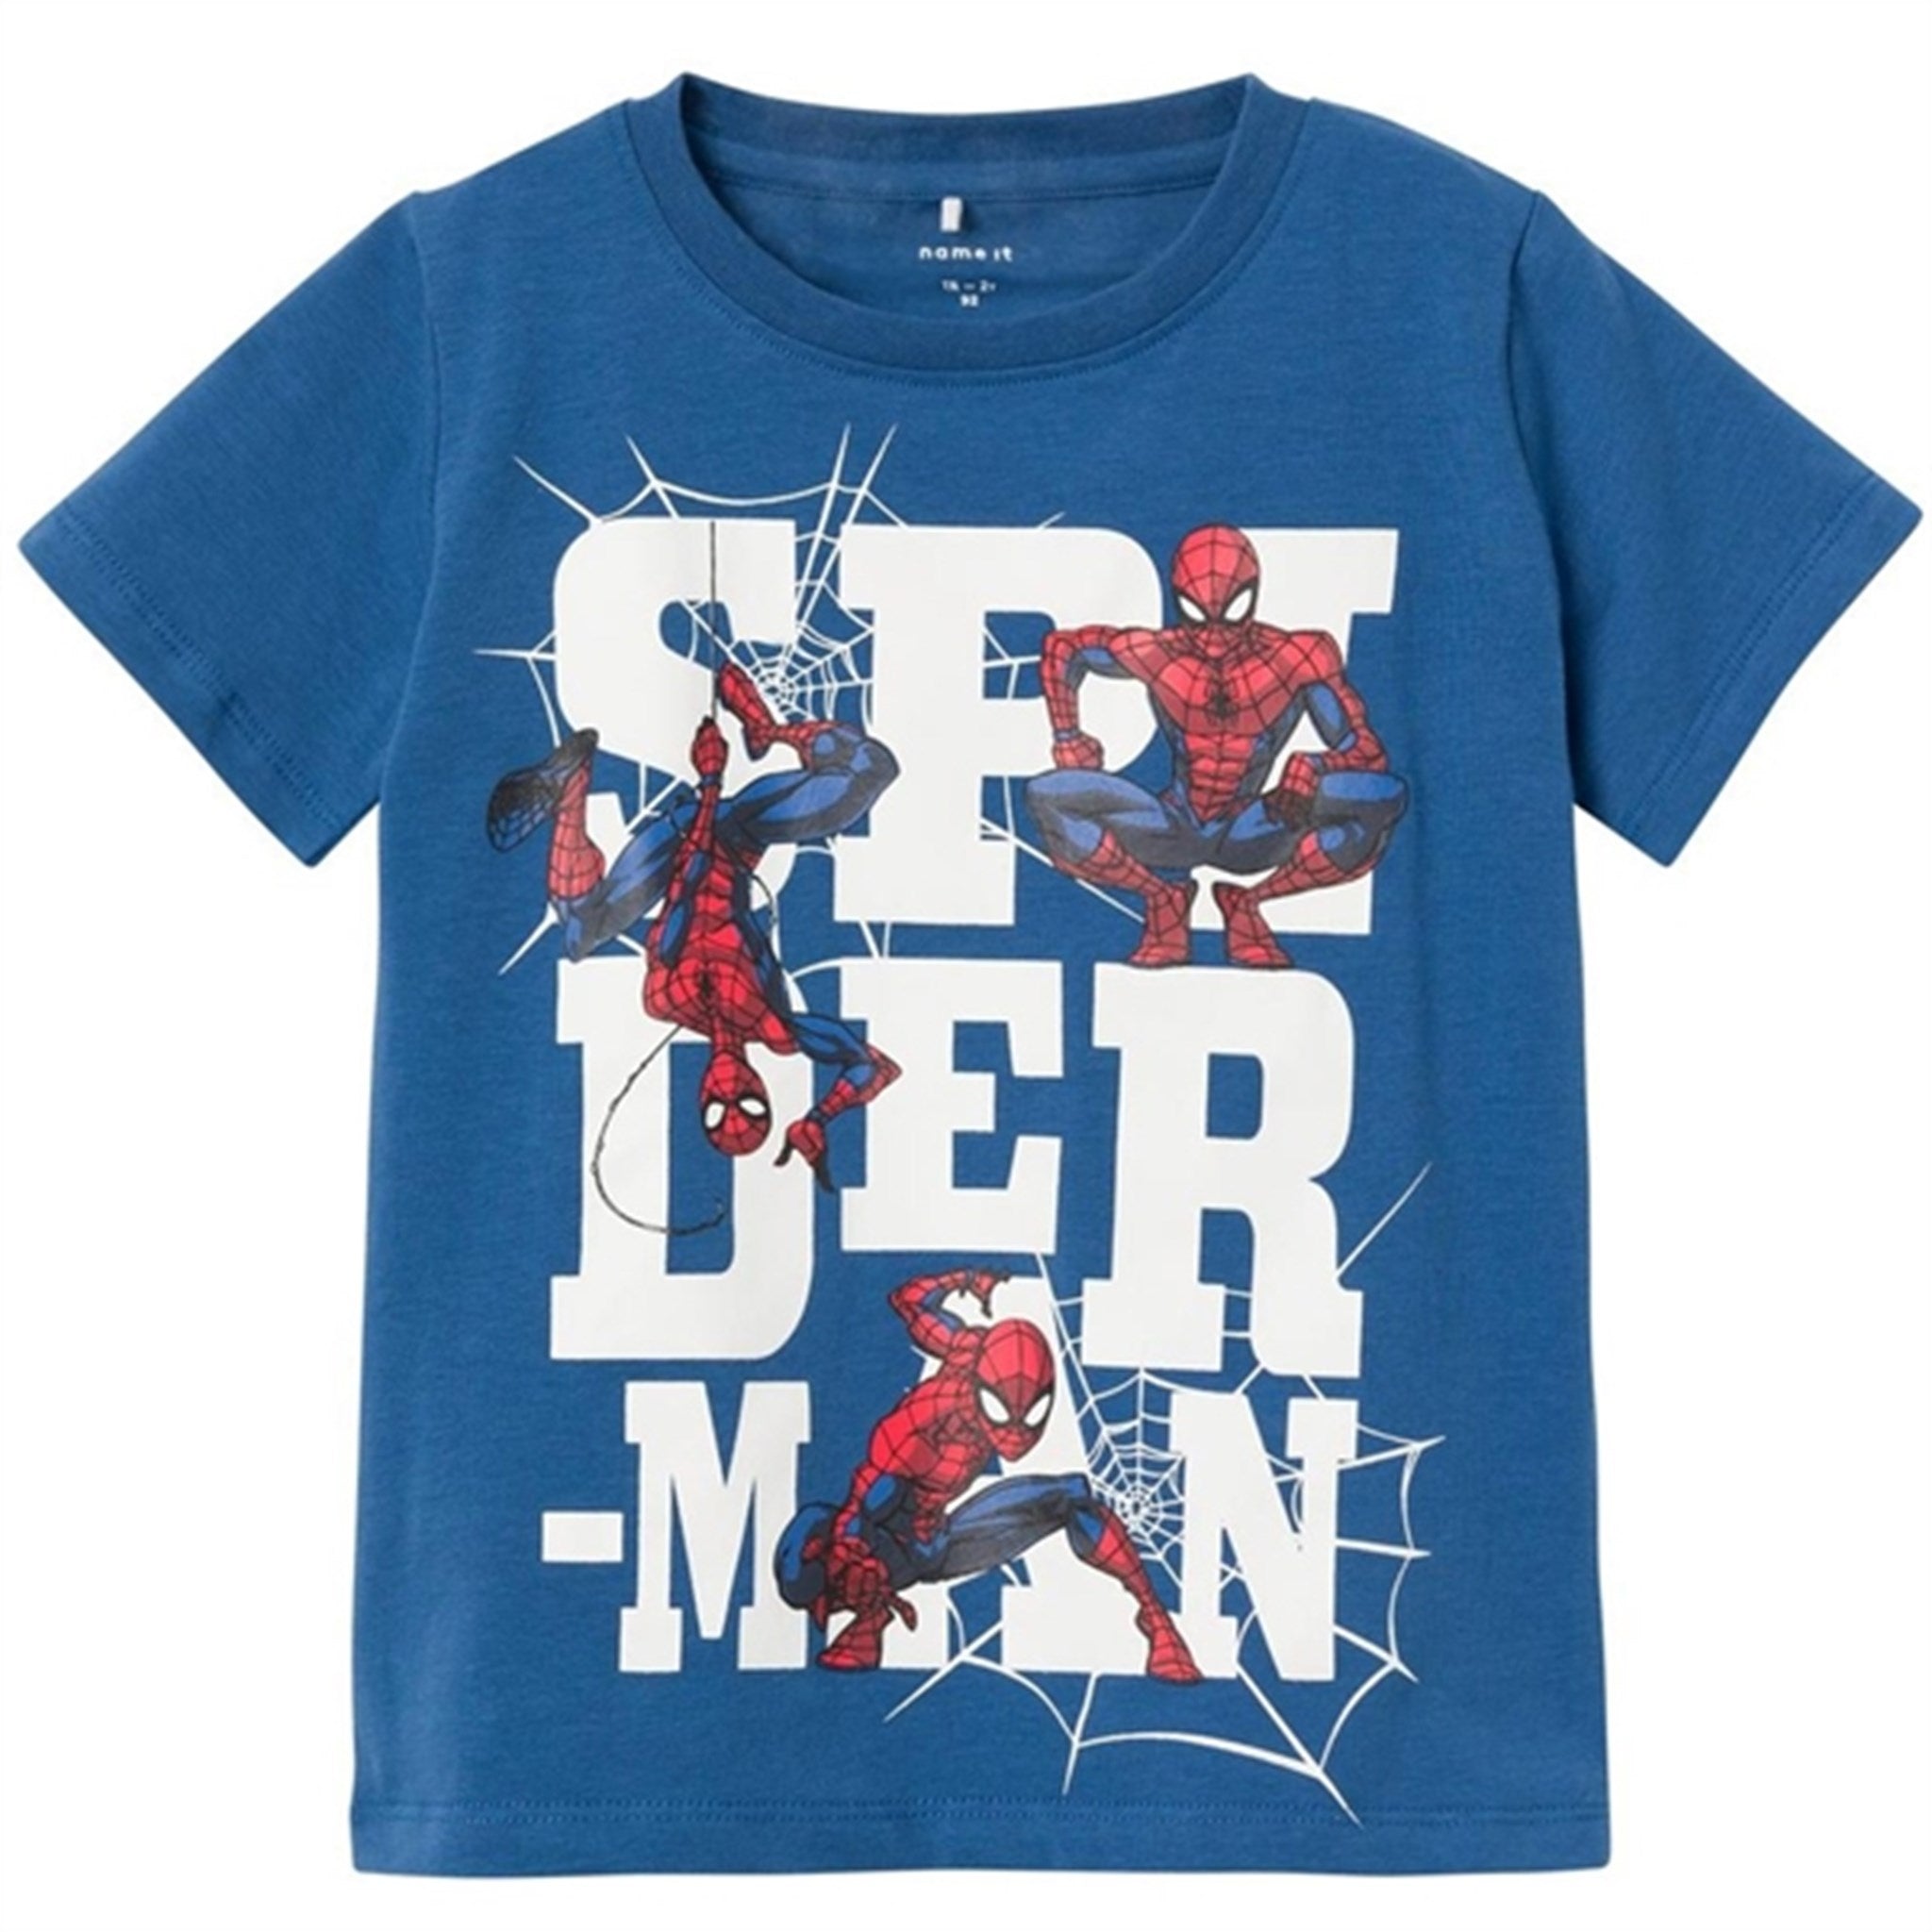 Name it Set Sail Makan Spiderman T-Shirt